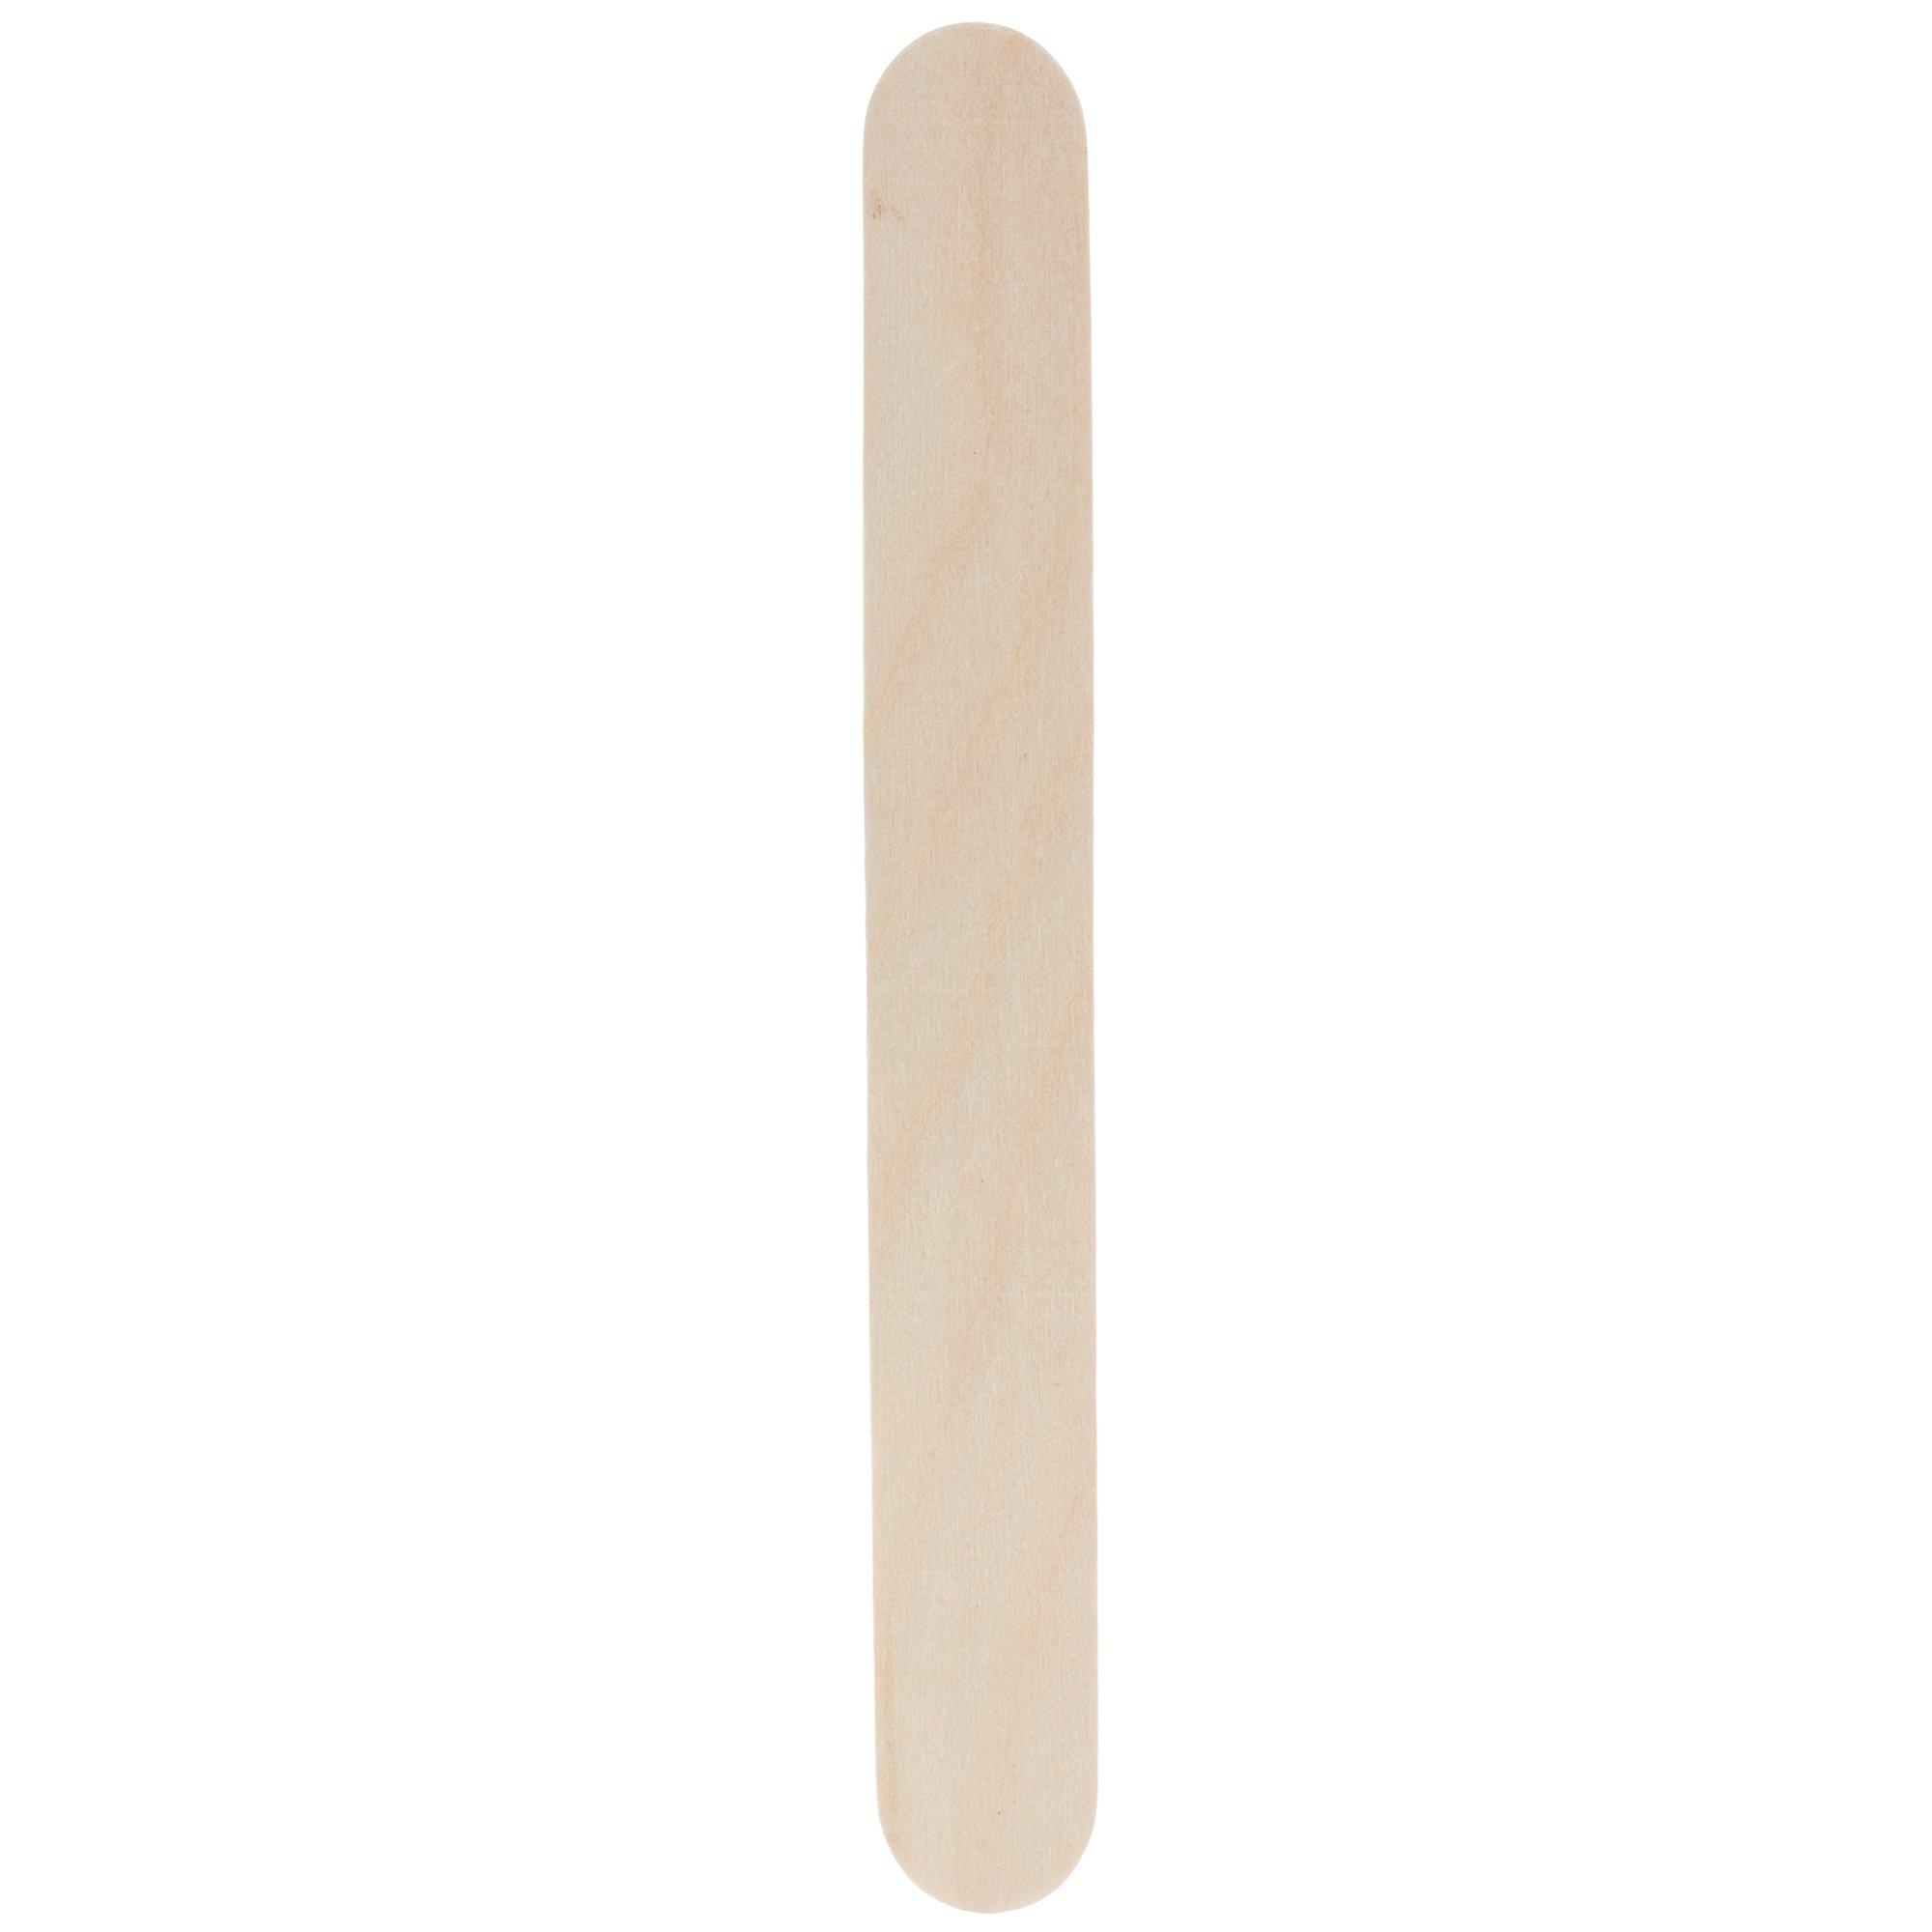 Jumbo Unfinished Wood Craft Sticks - Popsicle Sticks / Fan Sticks